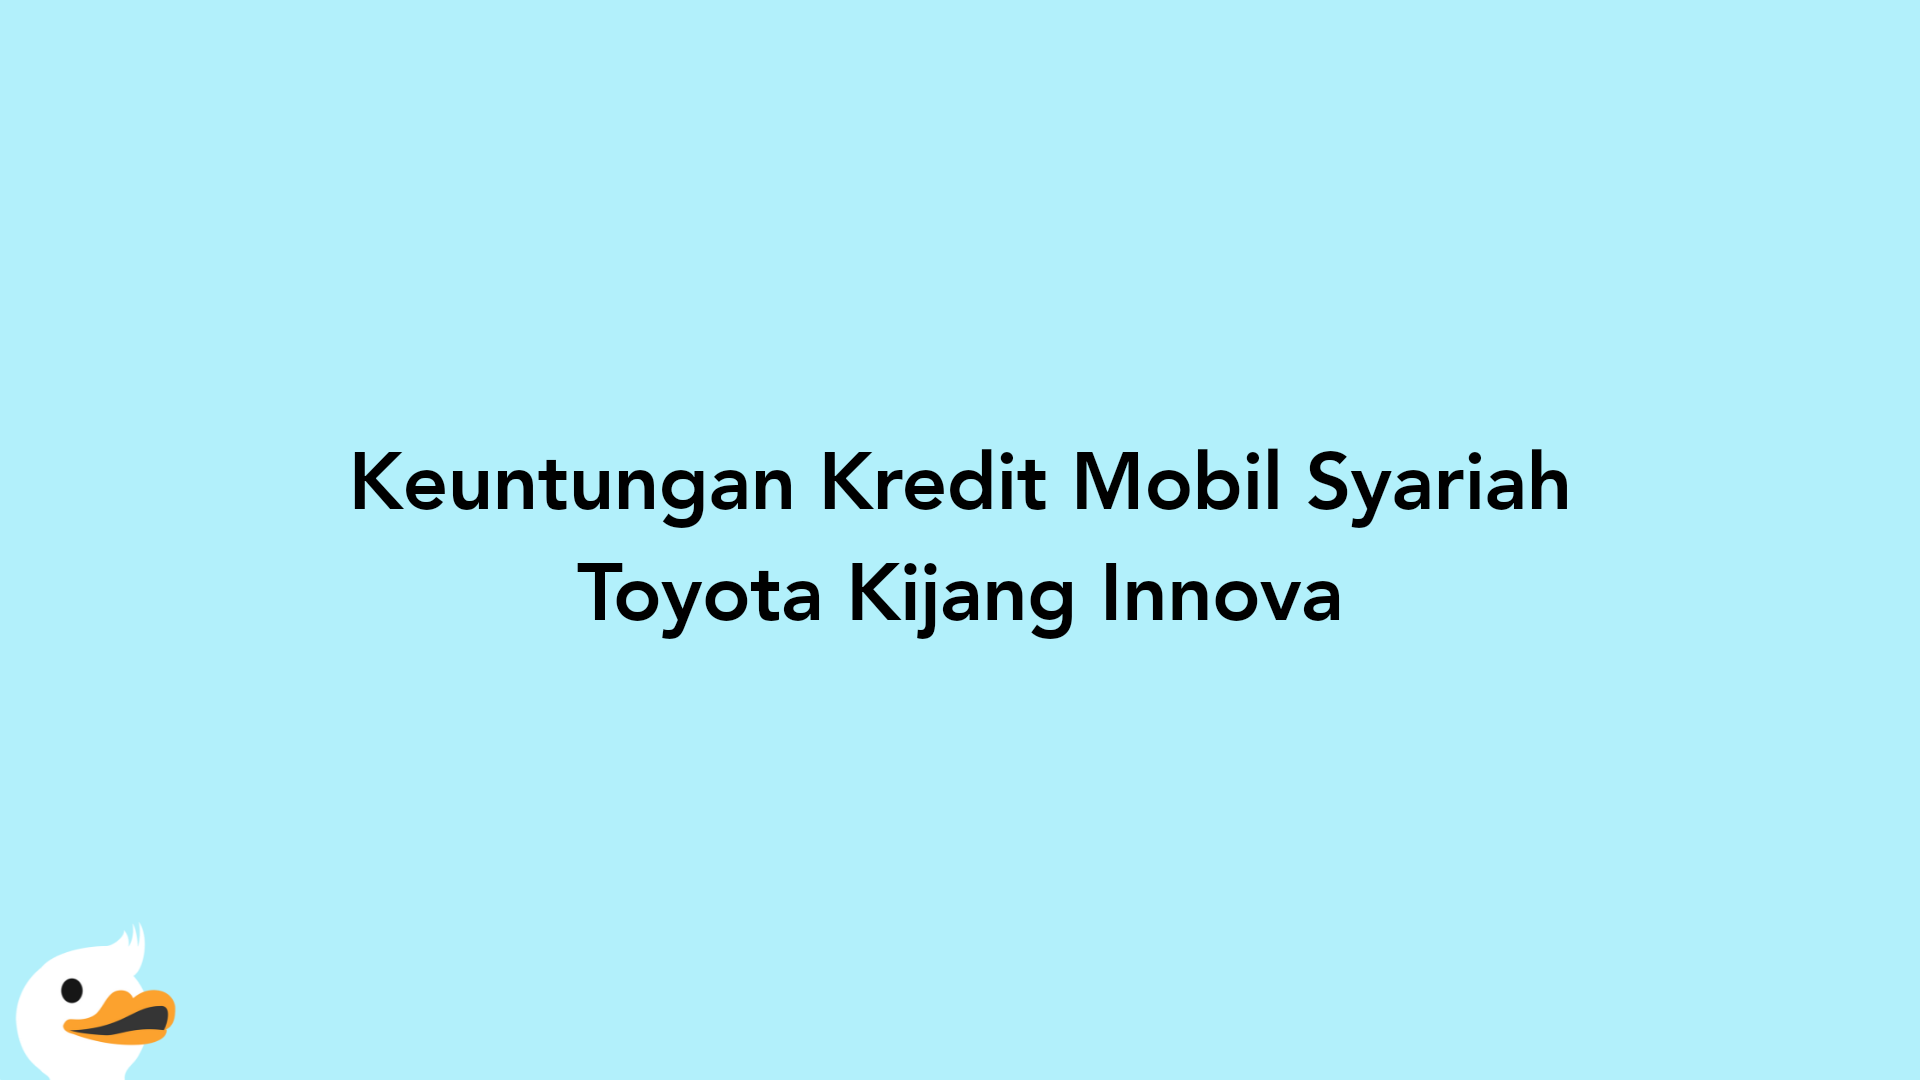 Keuntungan Kredit Mobil Syariah Toyota Kijang Innova